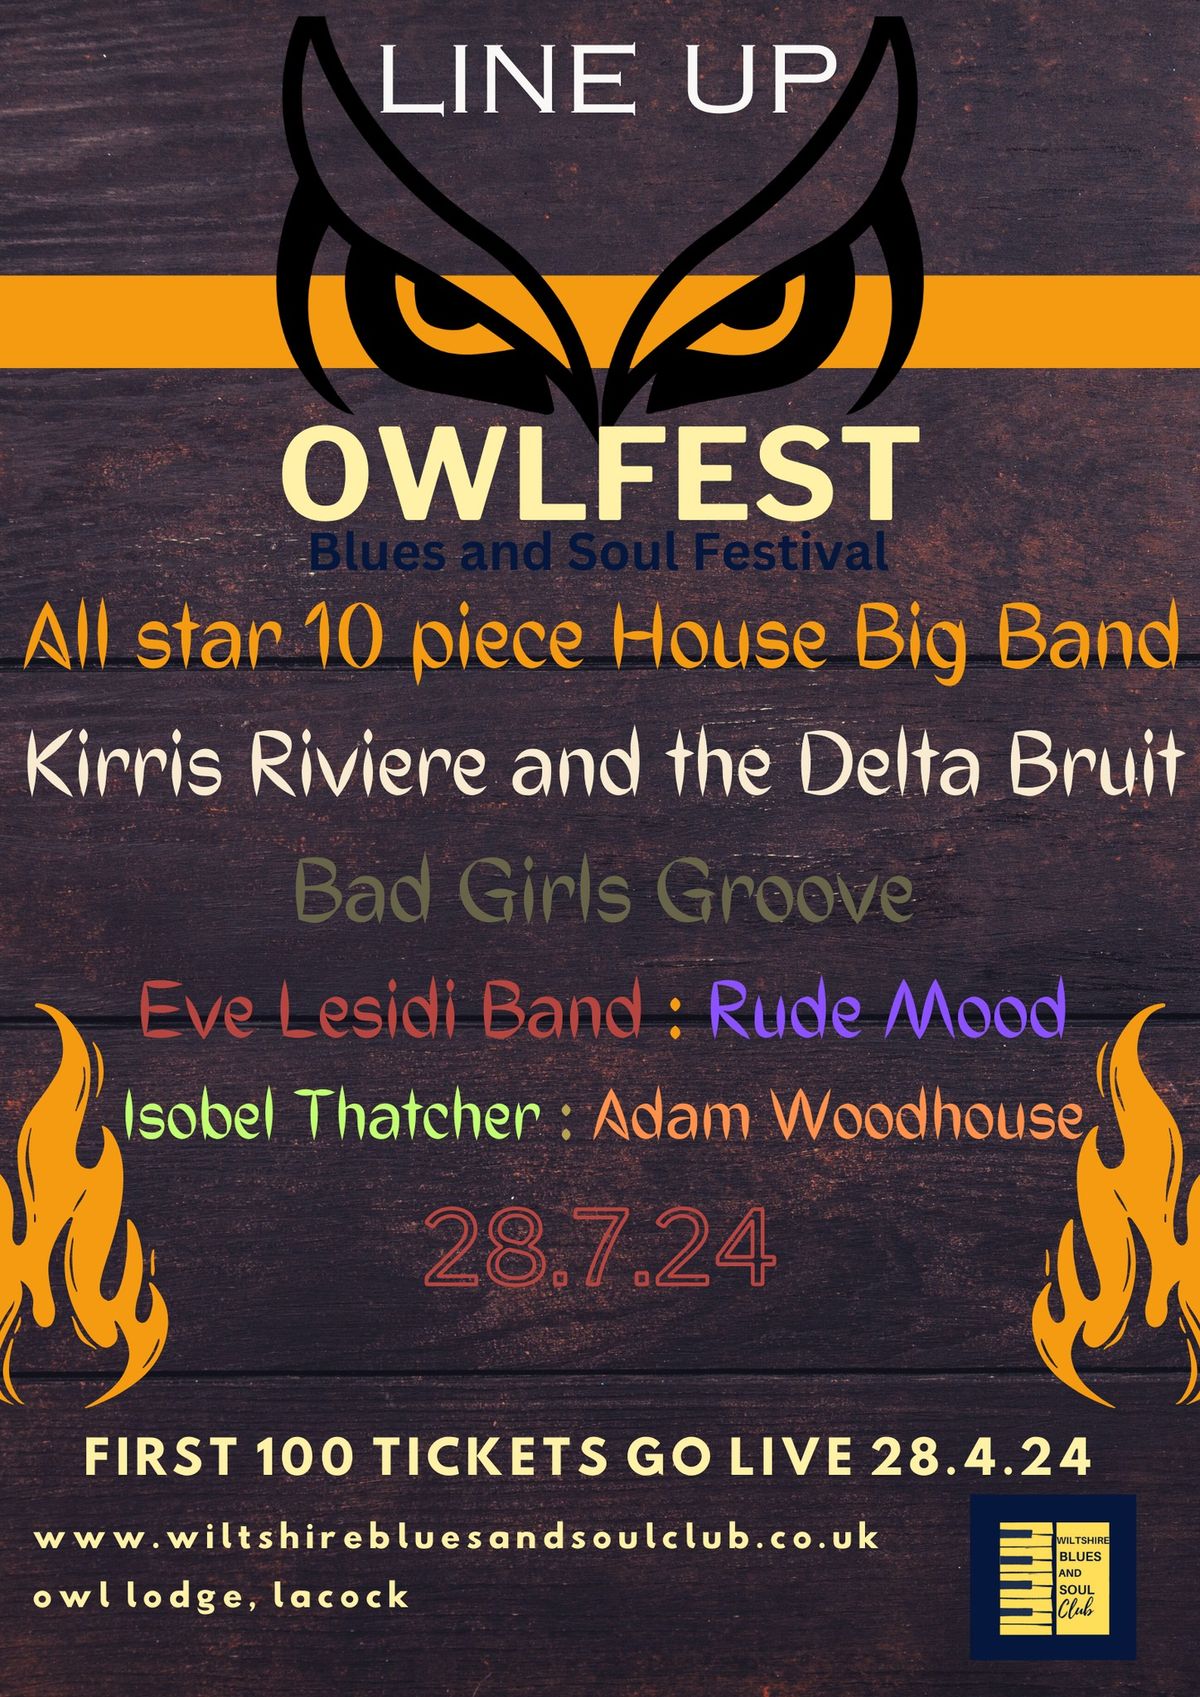 OWLFEST - Wiltshire Blues and Soul Club